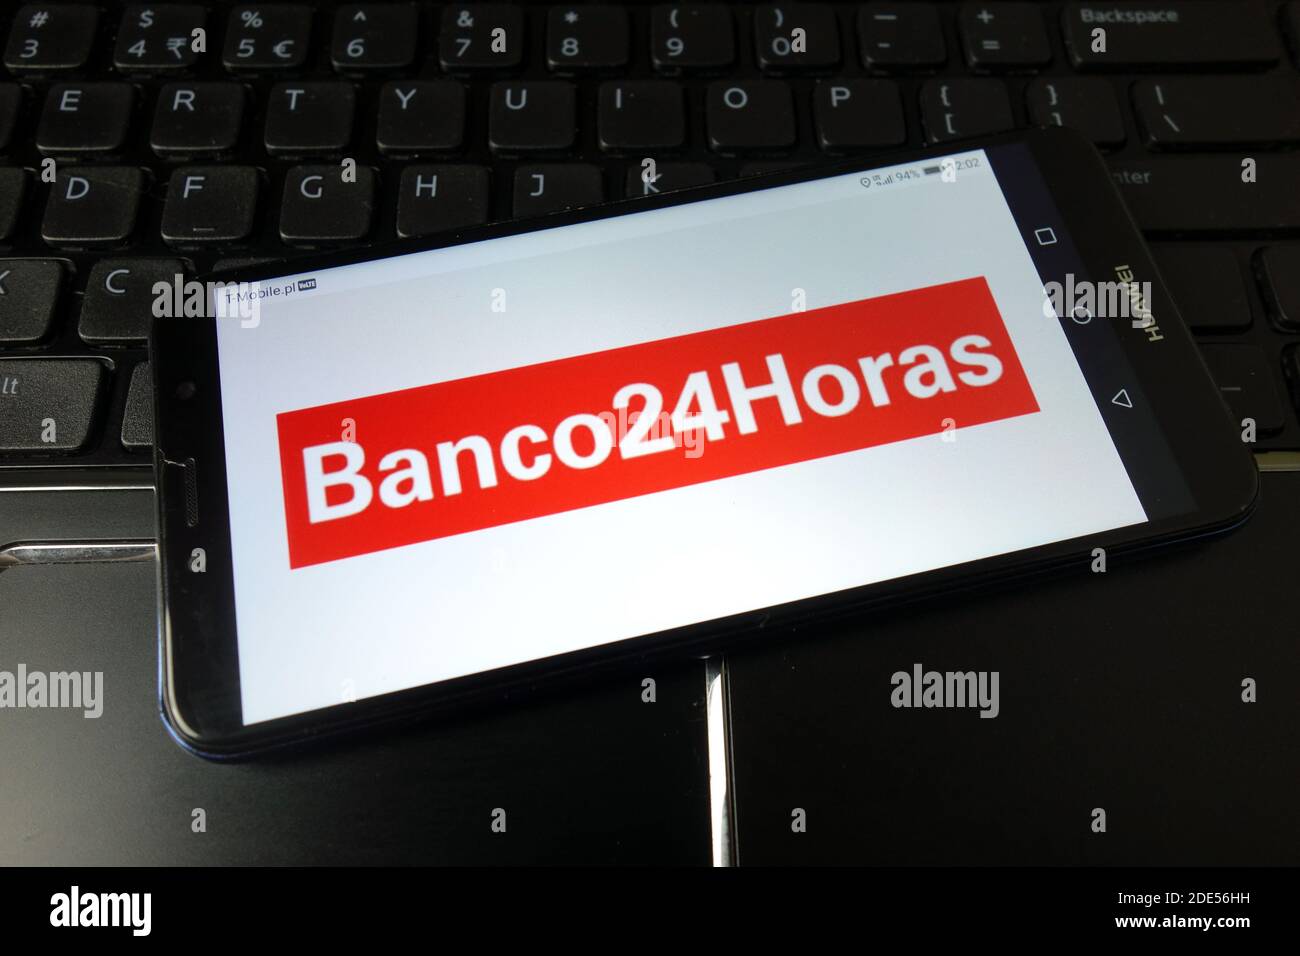 KONSKIE, POLEN - 11. Januar 2020: Banco24Horas Logo auf Handy angezeigt Stockfoto